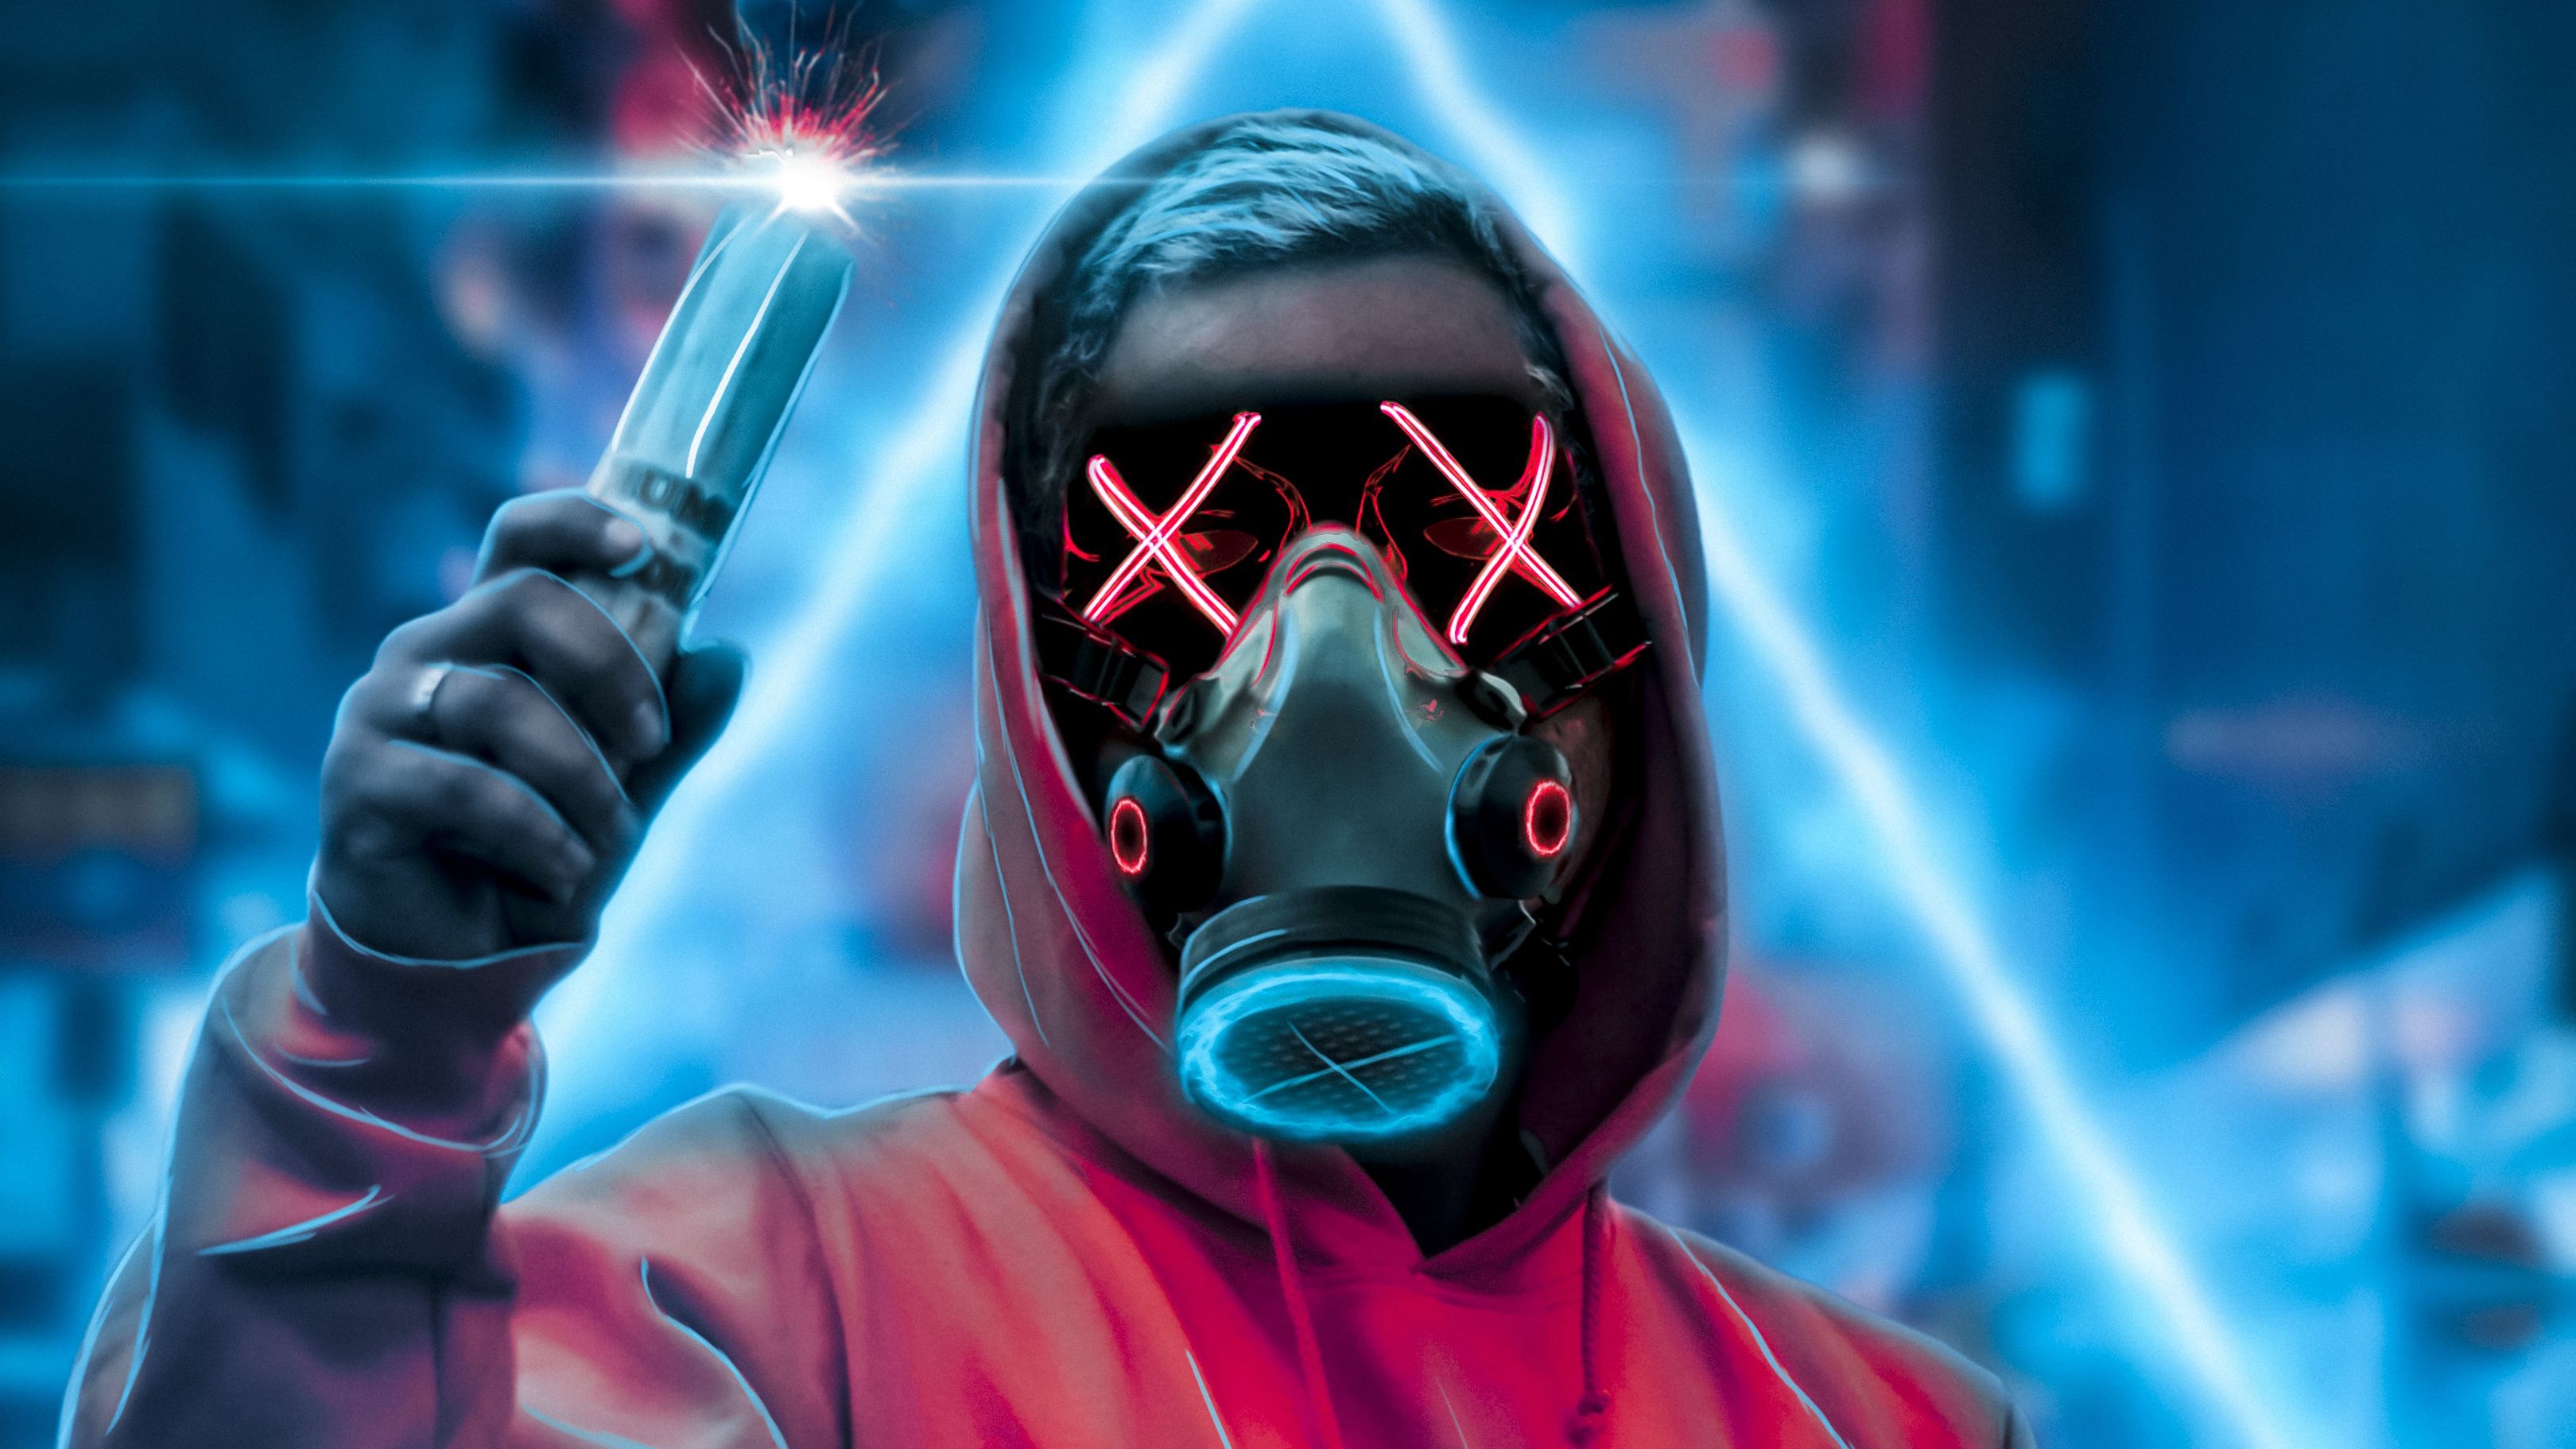 Face Mask Smoke Bomb 4k, HD Artist, 4k Wallpaper, Image